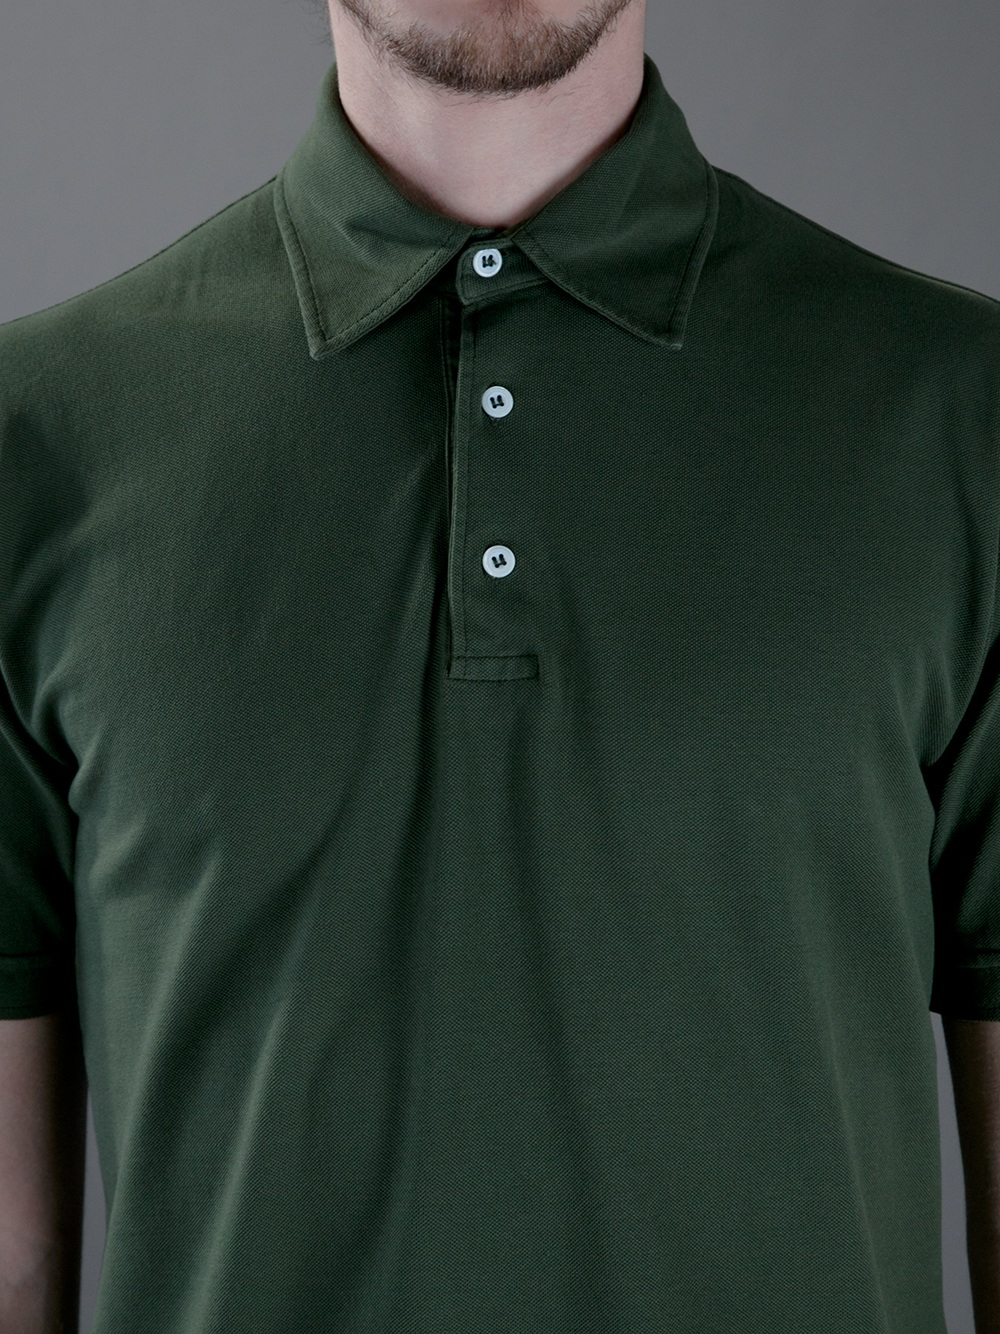 Fedeli Polo Shirt in Green for Men - Lyst